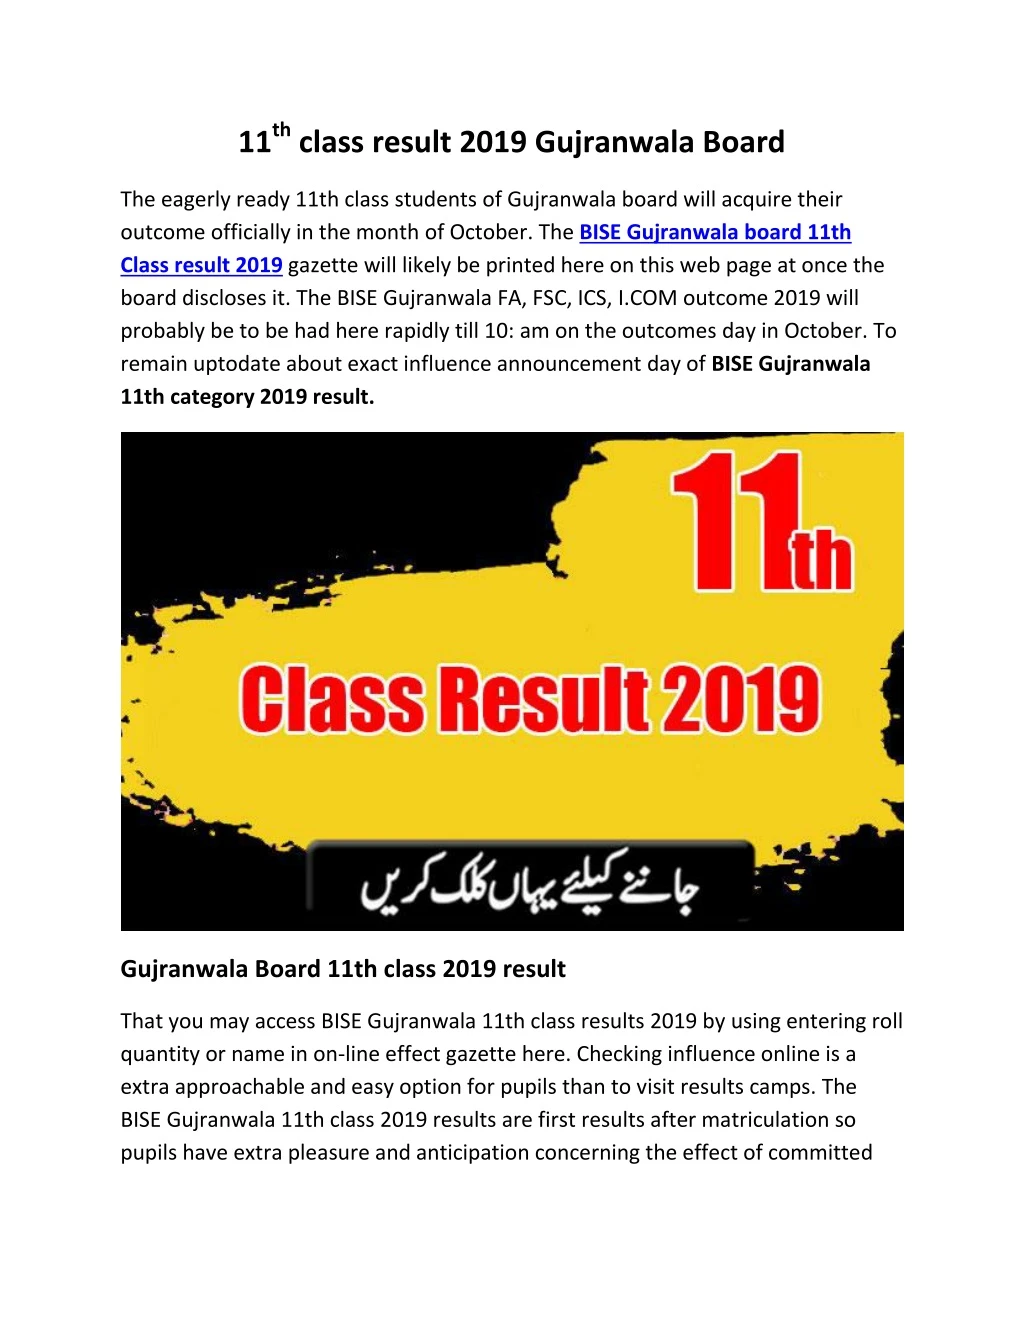 11 th class result 2019 gujranwala board